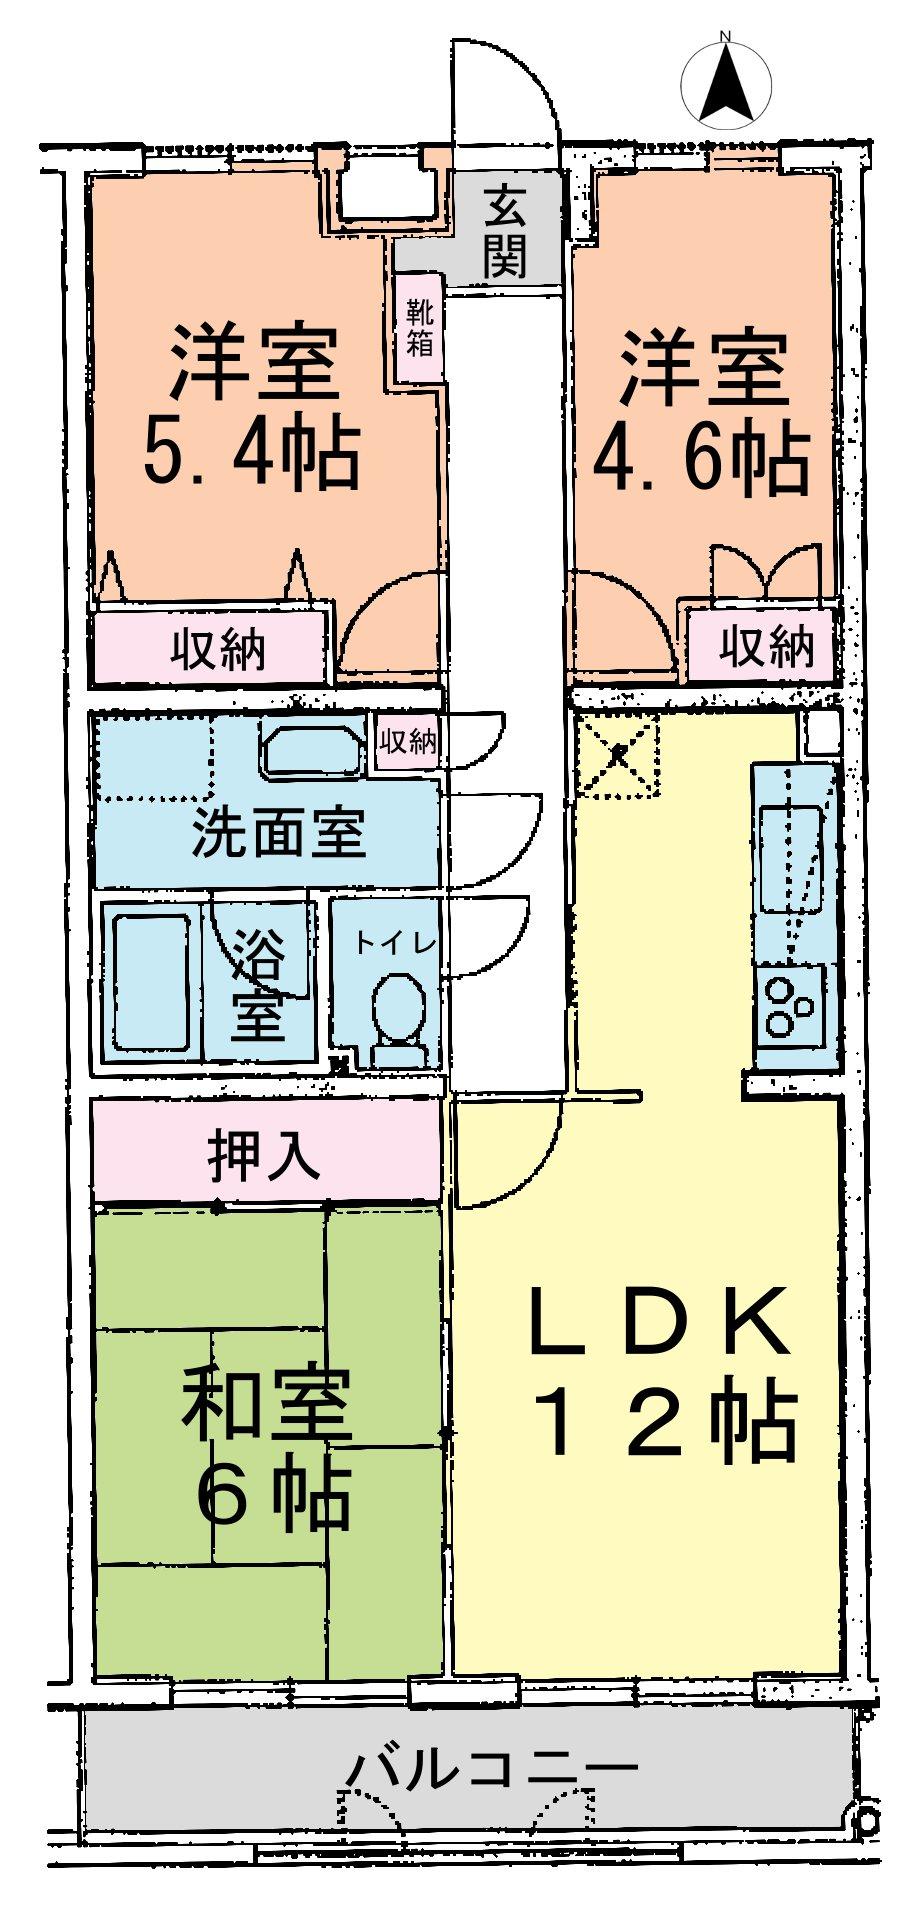 Floor plan. 3LDK, Price 20.5 million yen, Footprint 66.7 sq m , Balcony area 6.96 sq m